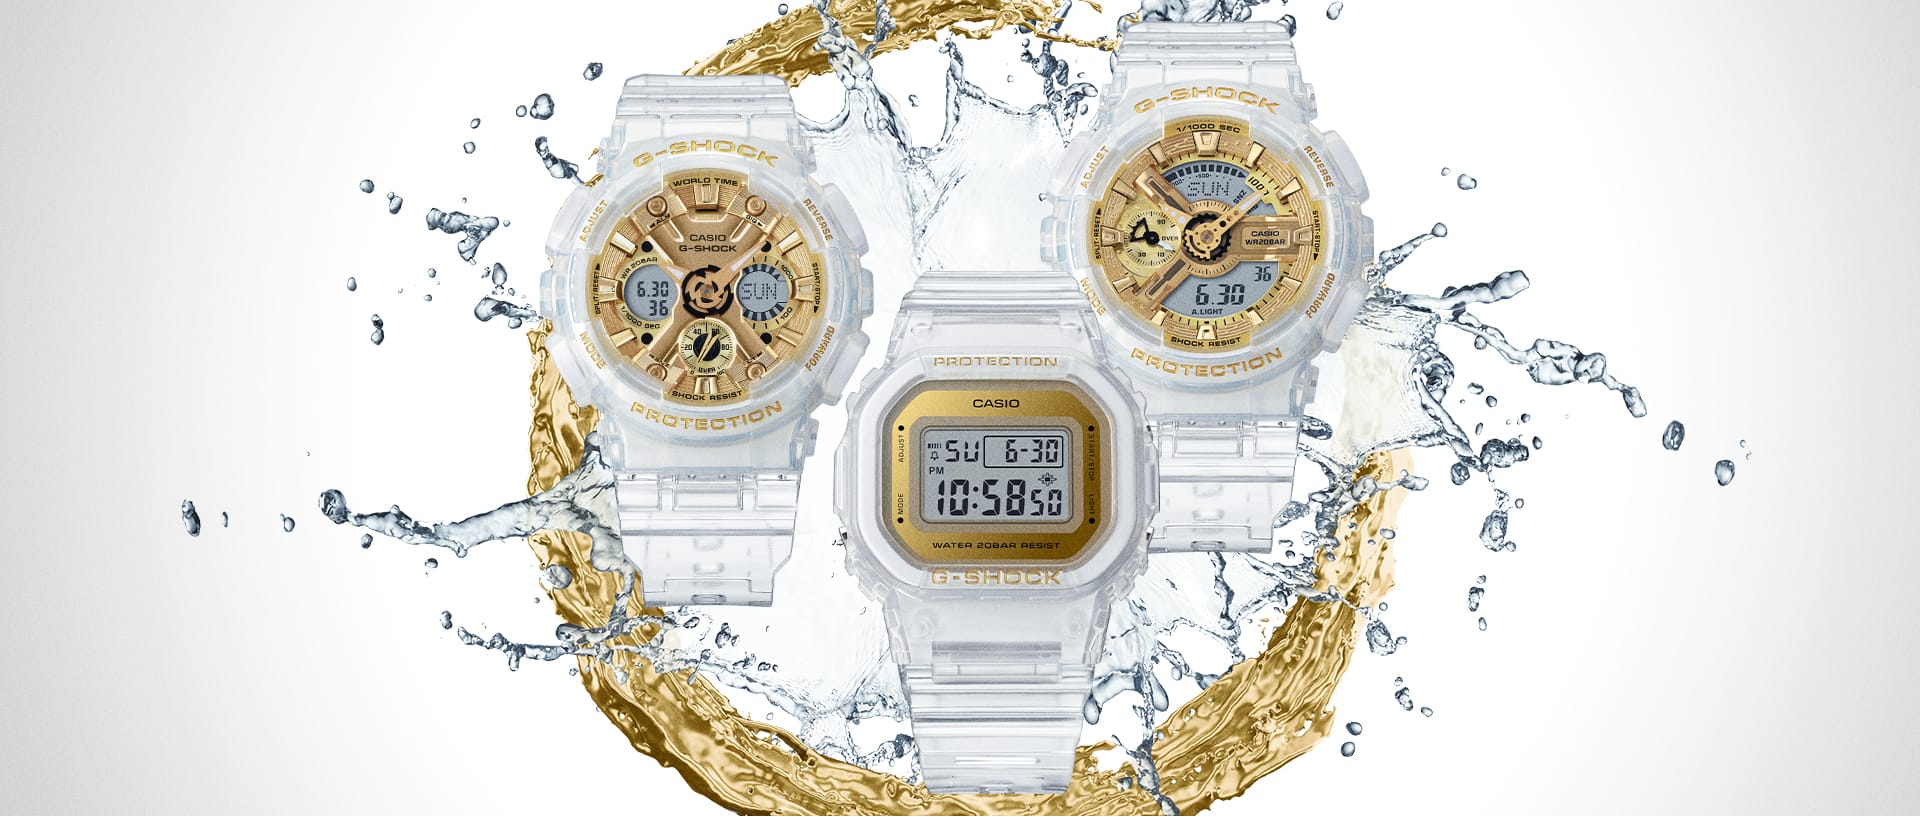 G-SHOCK Women's transparent watches with gold face, GMAS110SG-7A, GMAS120SG-7A, GMDS5600SG-7 